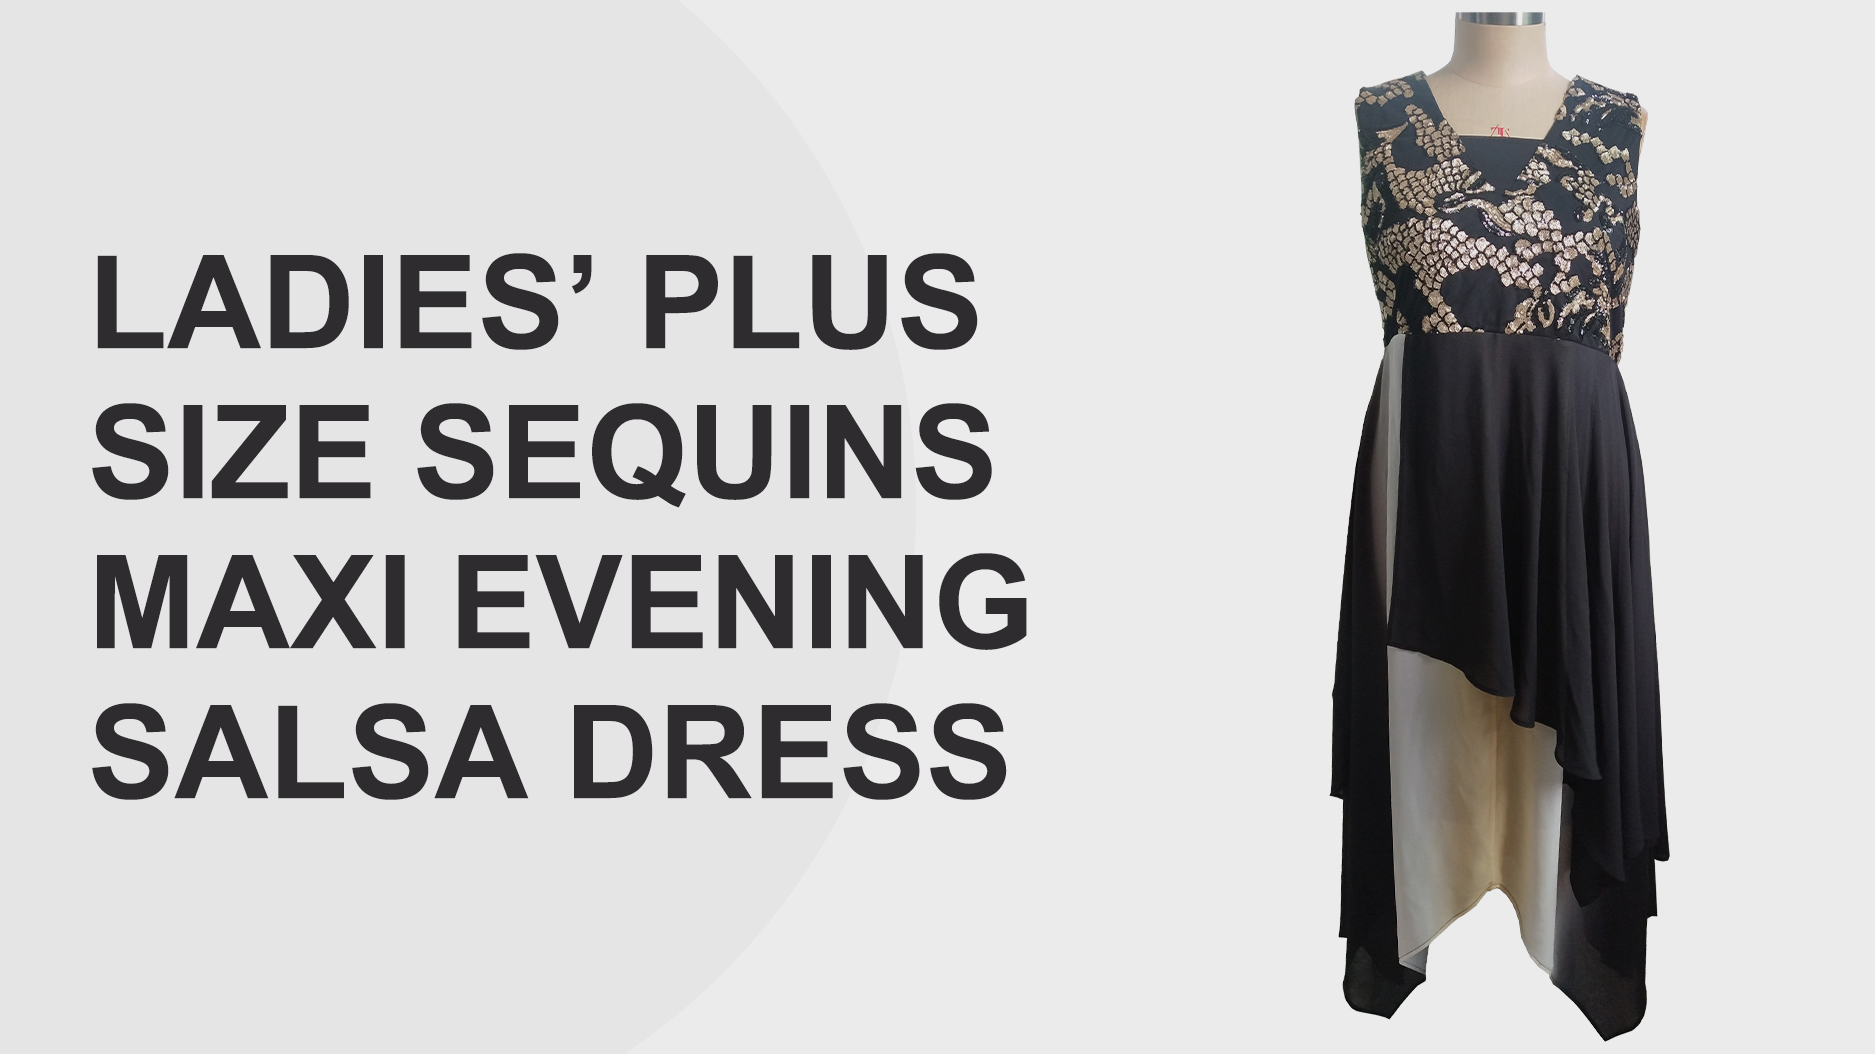 Ladies Maxi Evening Salsa Dress Plus Size Sequins